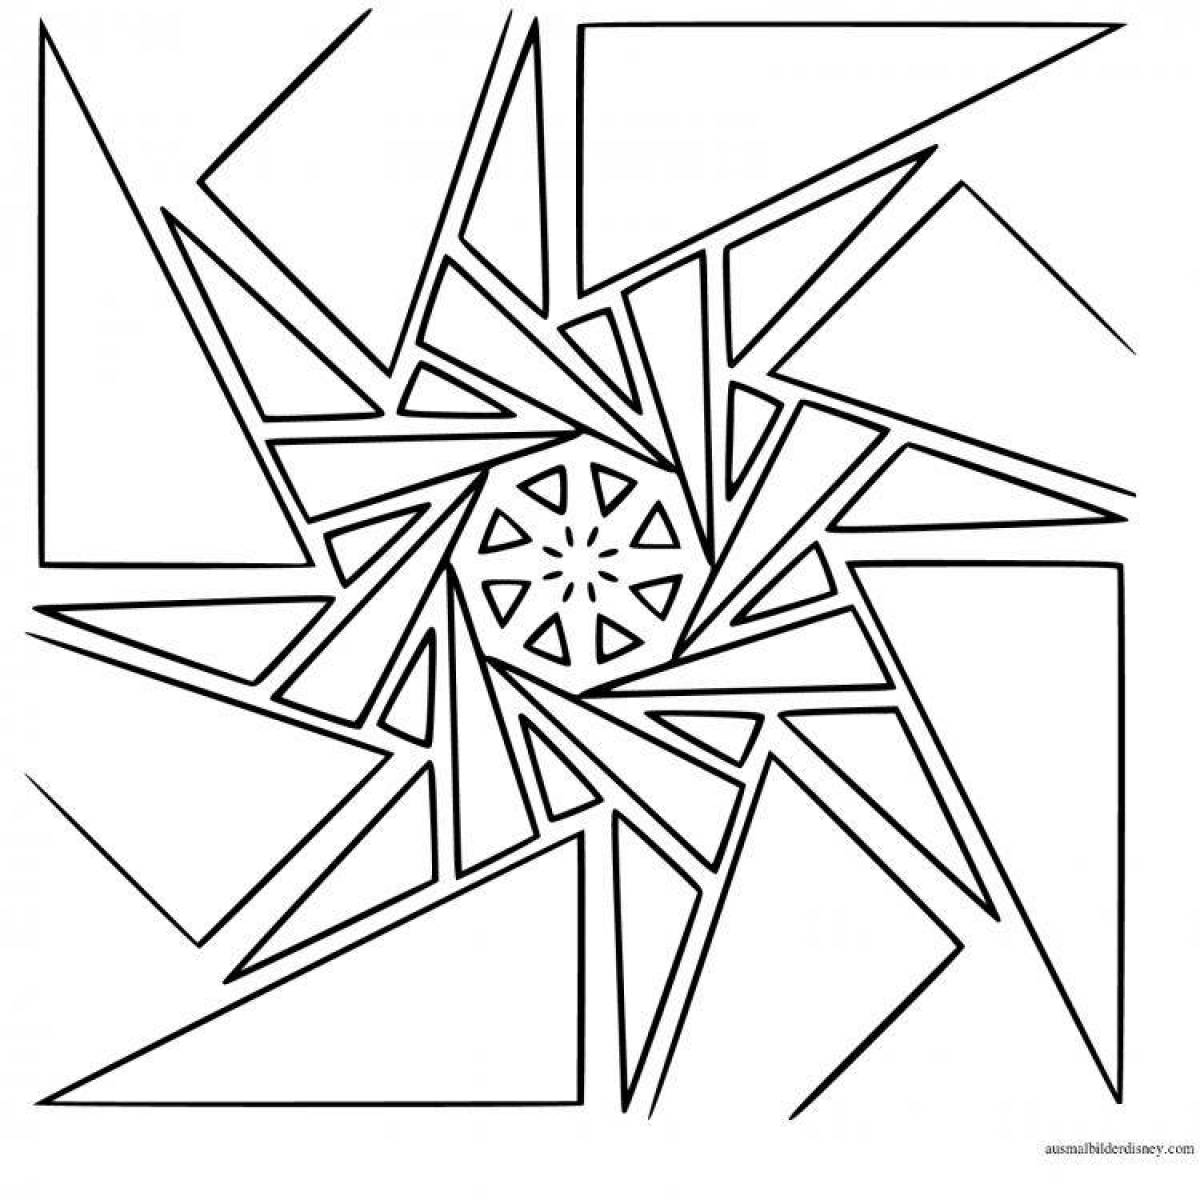 Unique geometry coloring page